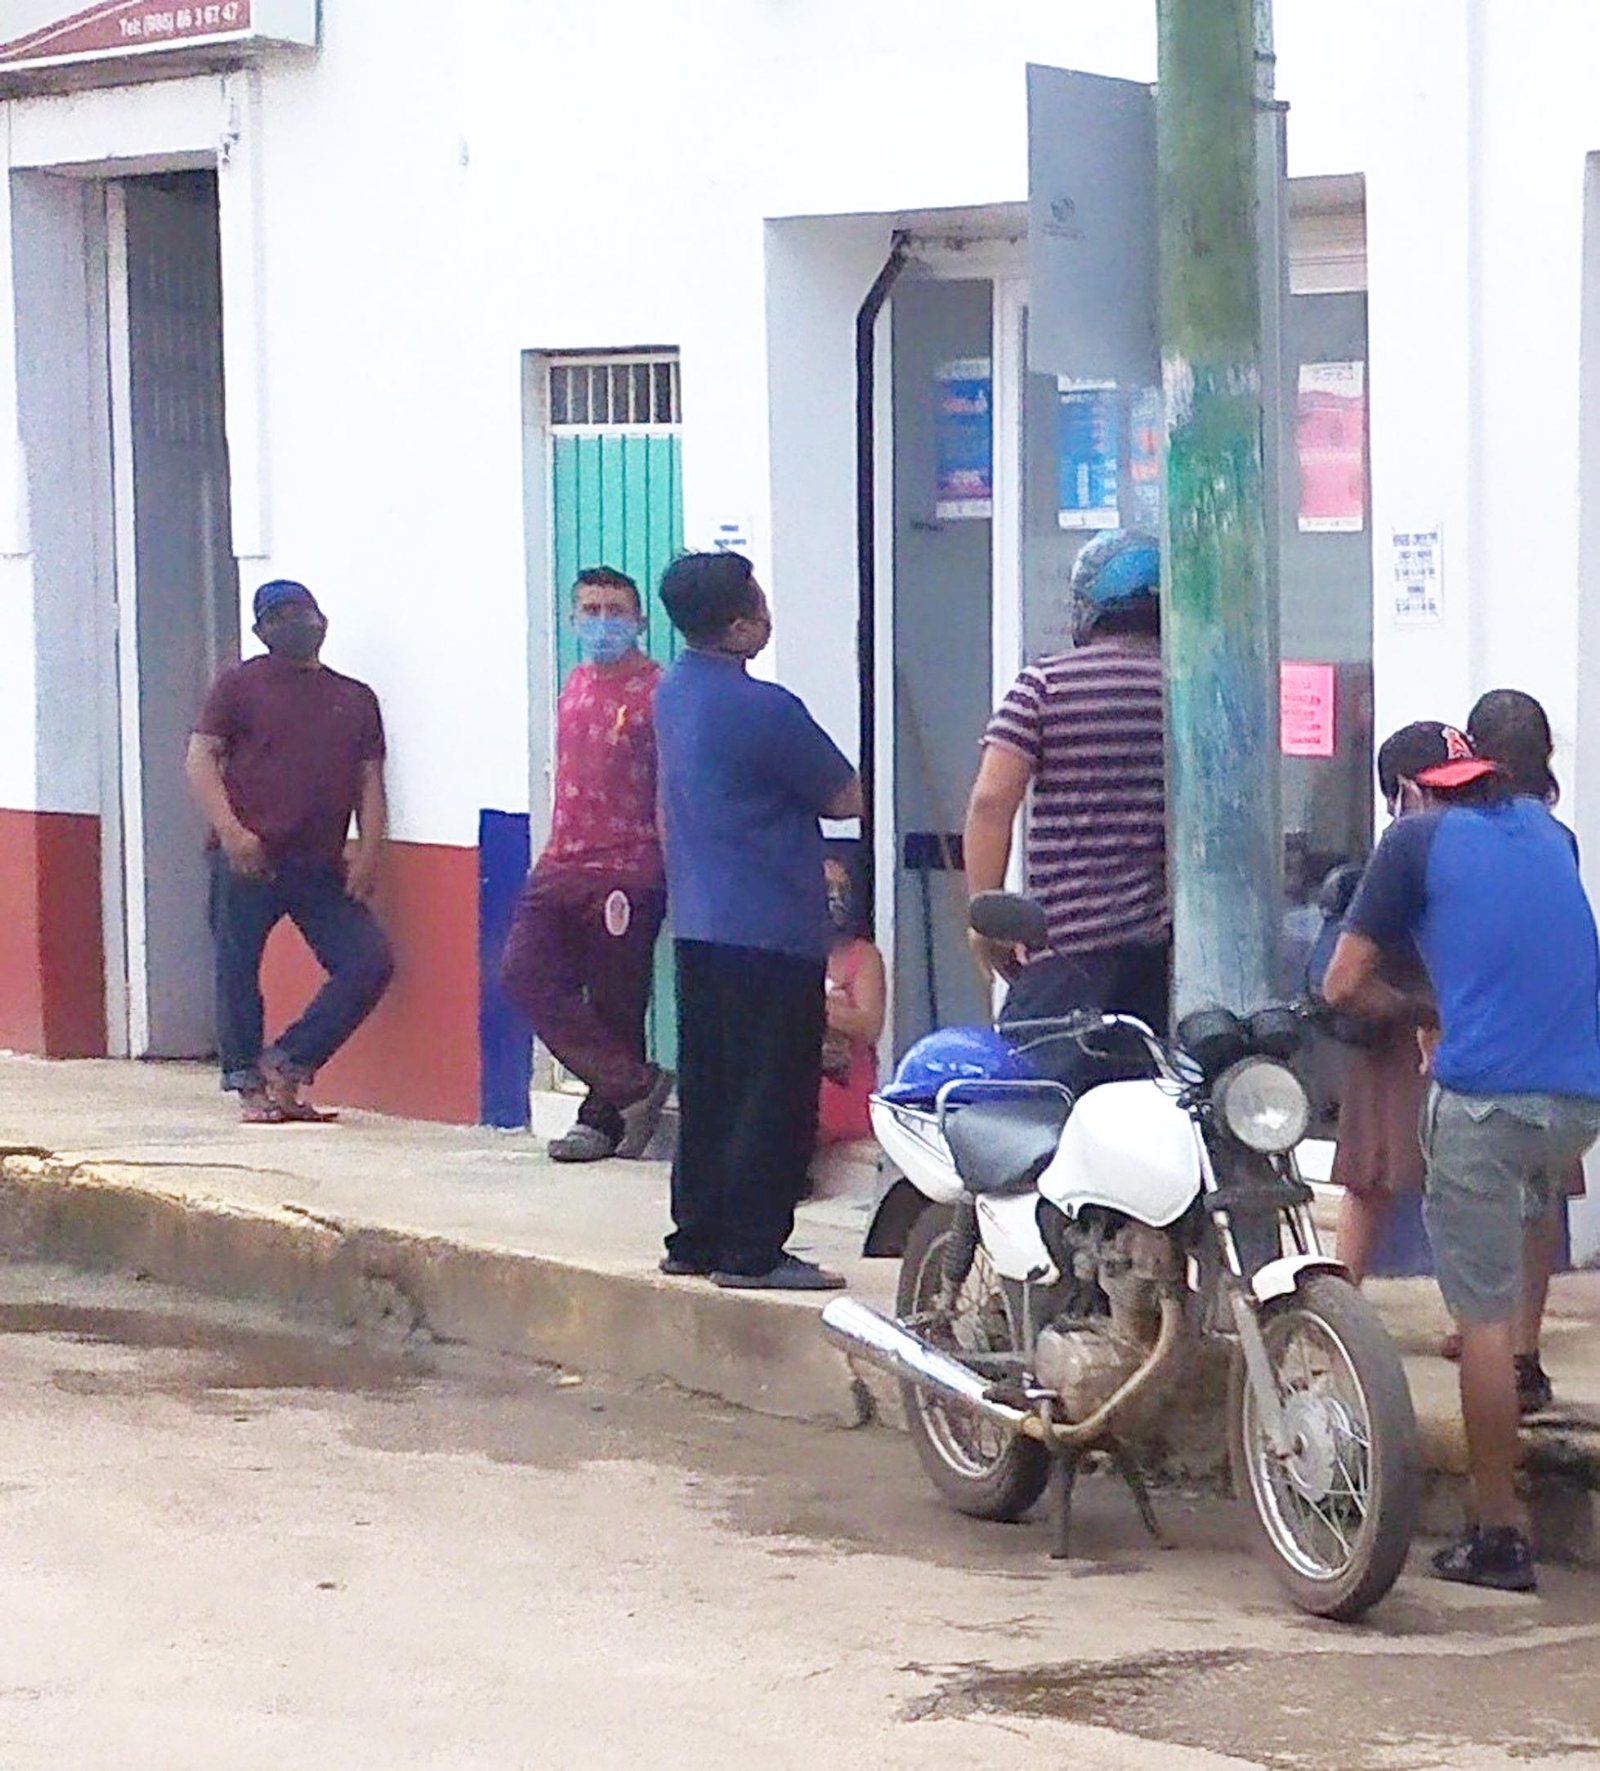 Pobladores de Tizimín temen consultar en clínicas públicas